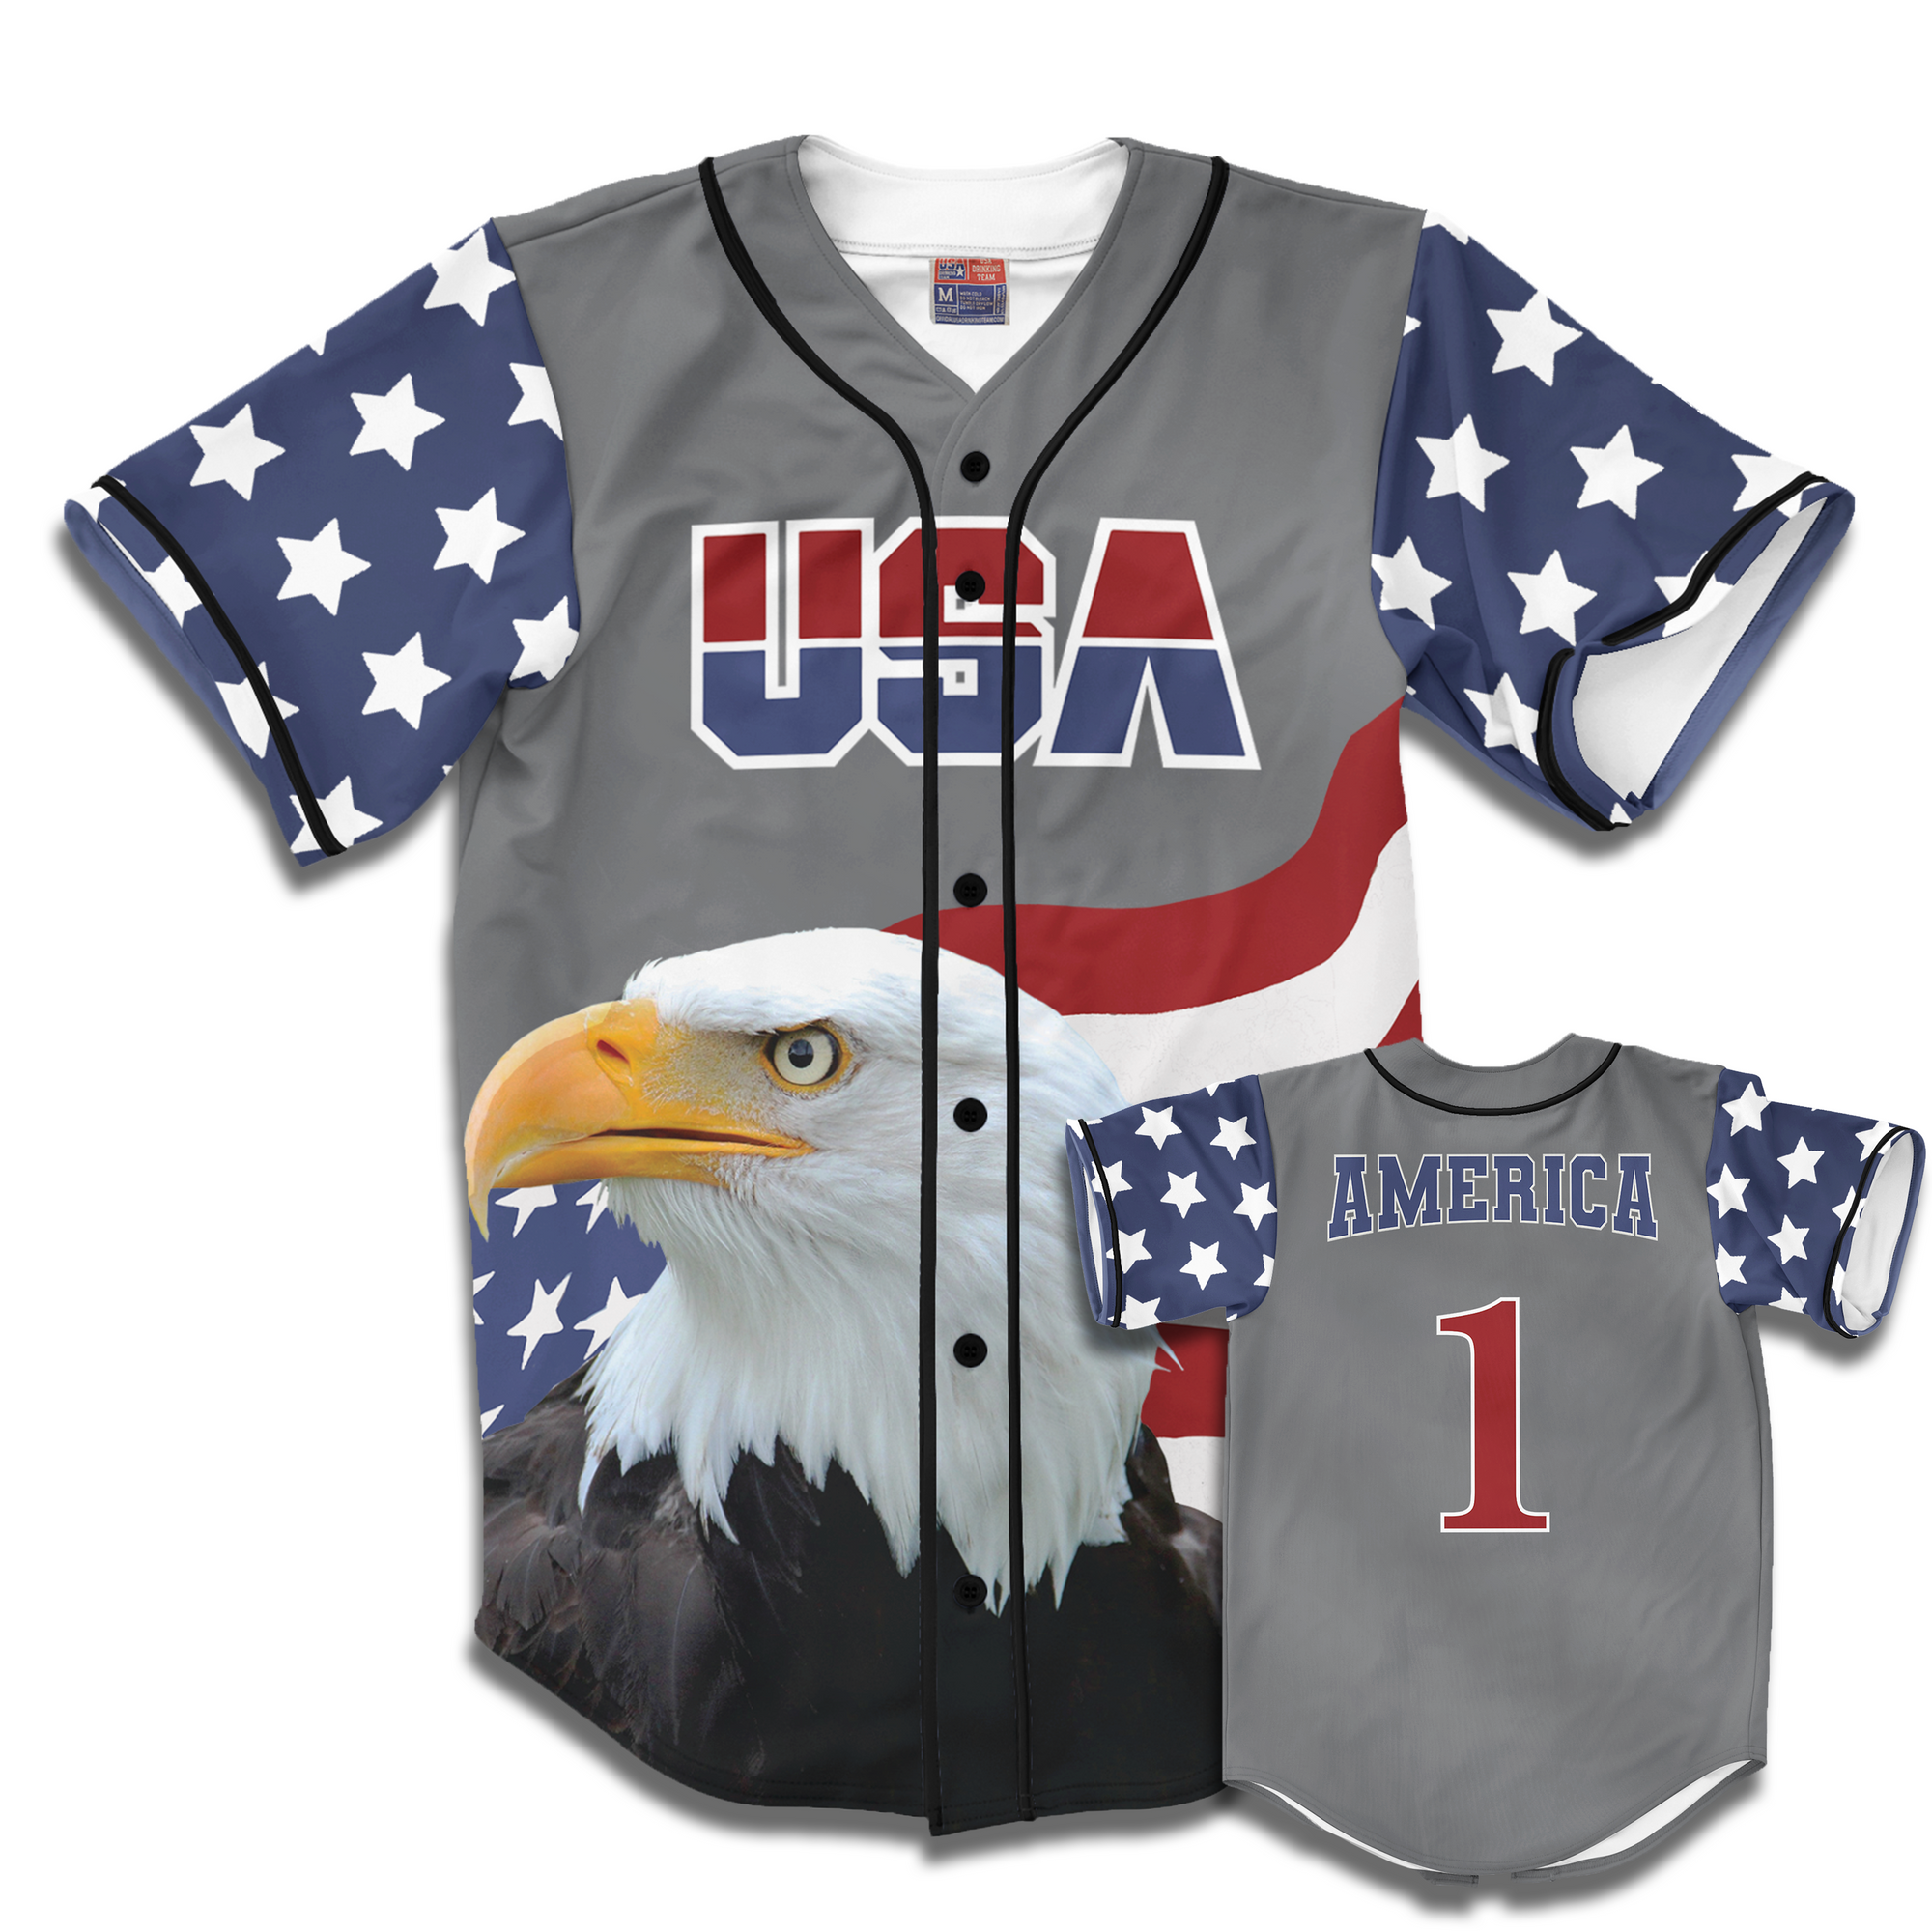 America # 1 Baseball Jersey (Red, White & Blue) - USA Drinking Team